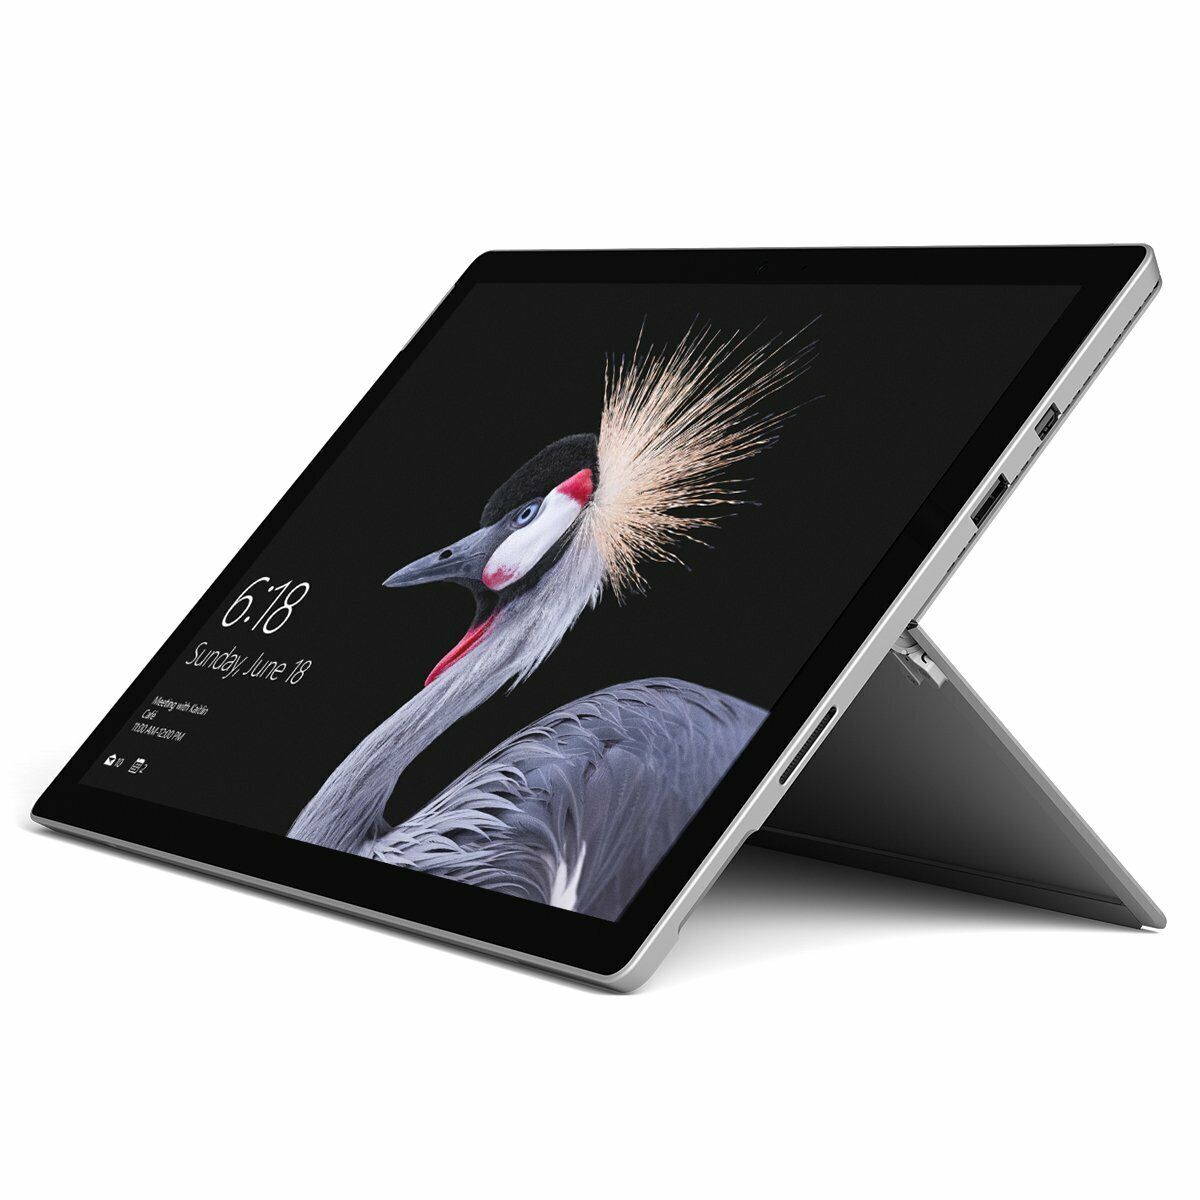 Microsoft Surface Pro 5 1796 i5-7300U 256GB 8GB Spanish Key